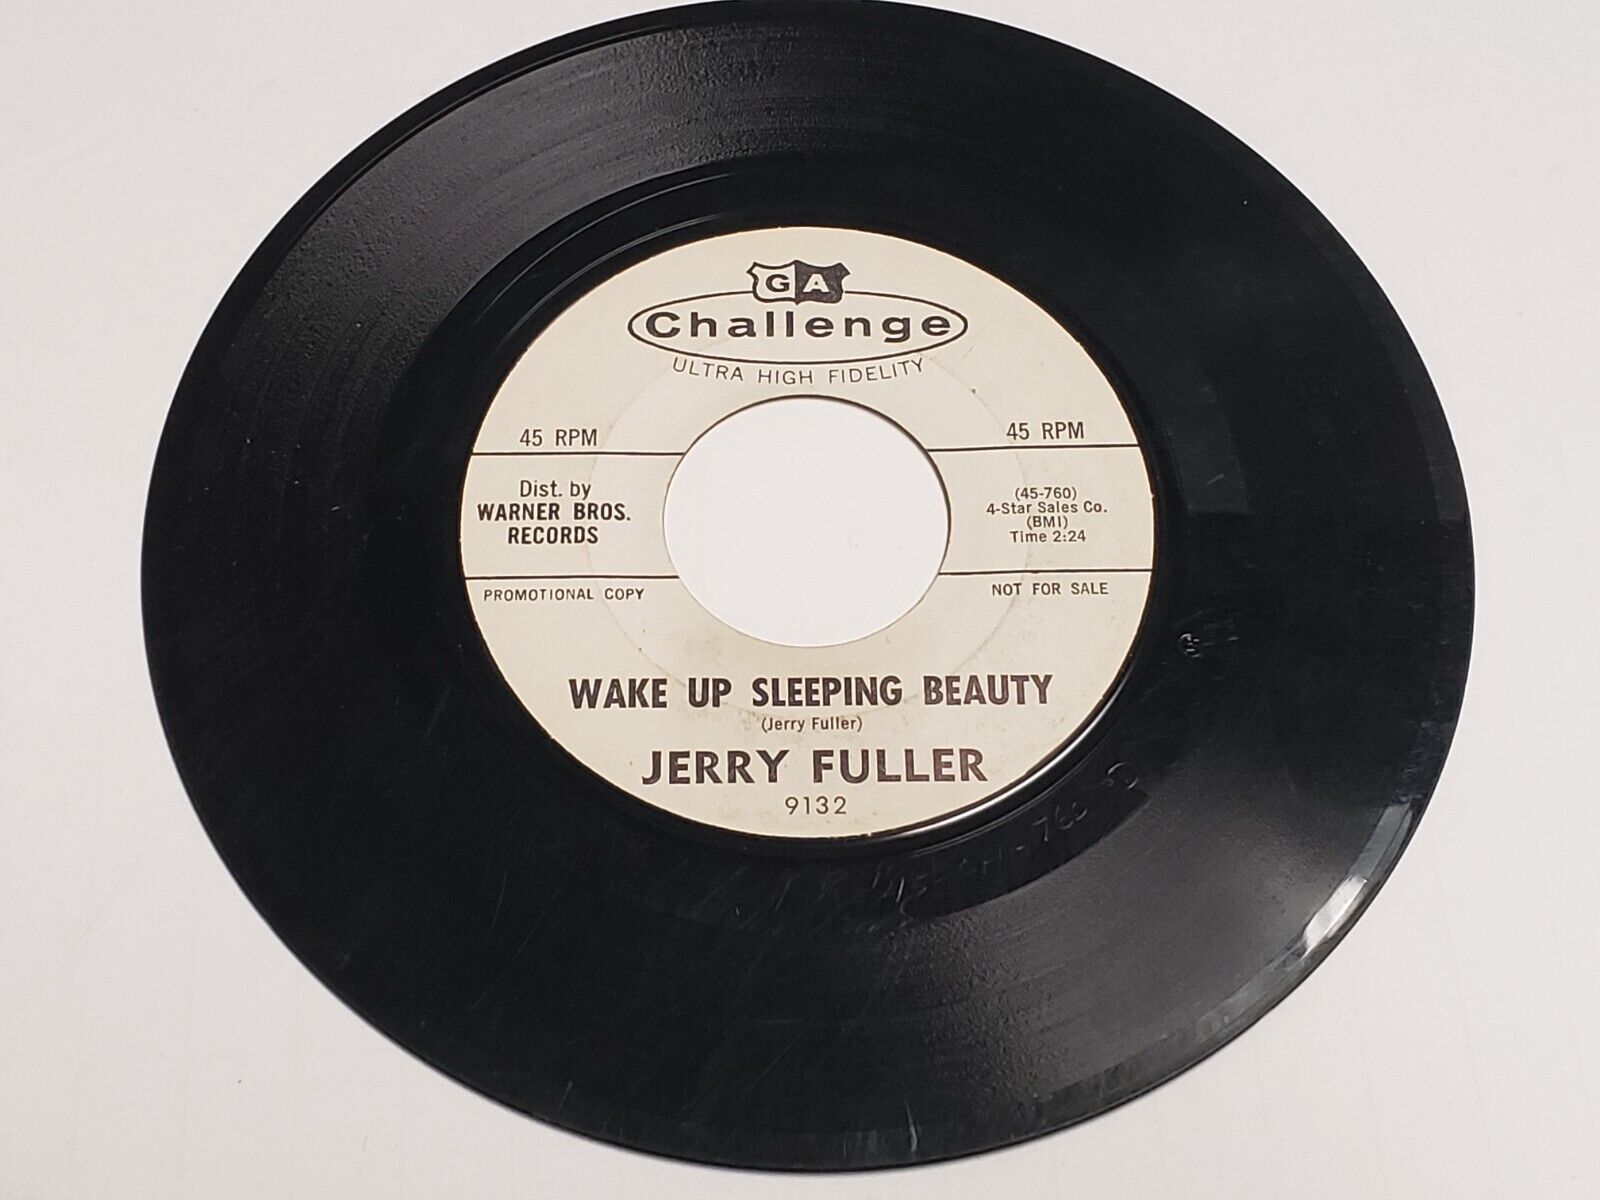 Vtg 1962 45 RPM Jerry Fuller – Wake Up Sleeping Beauty - Challenge PROMO VG+